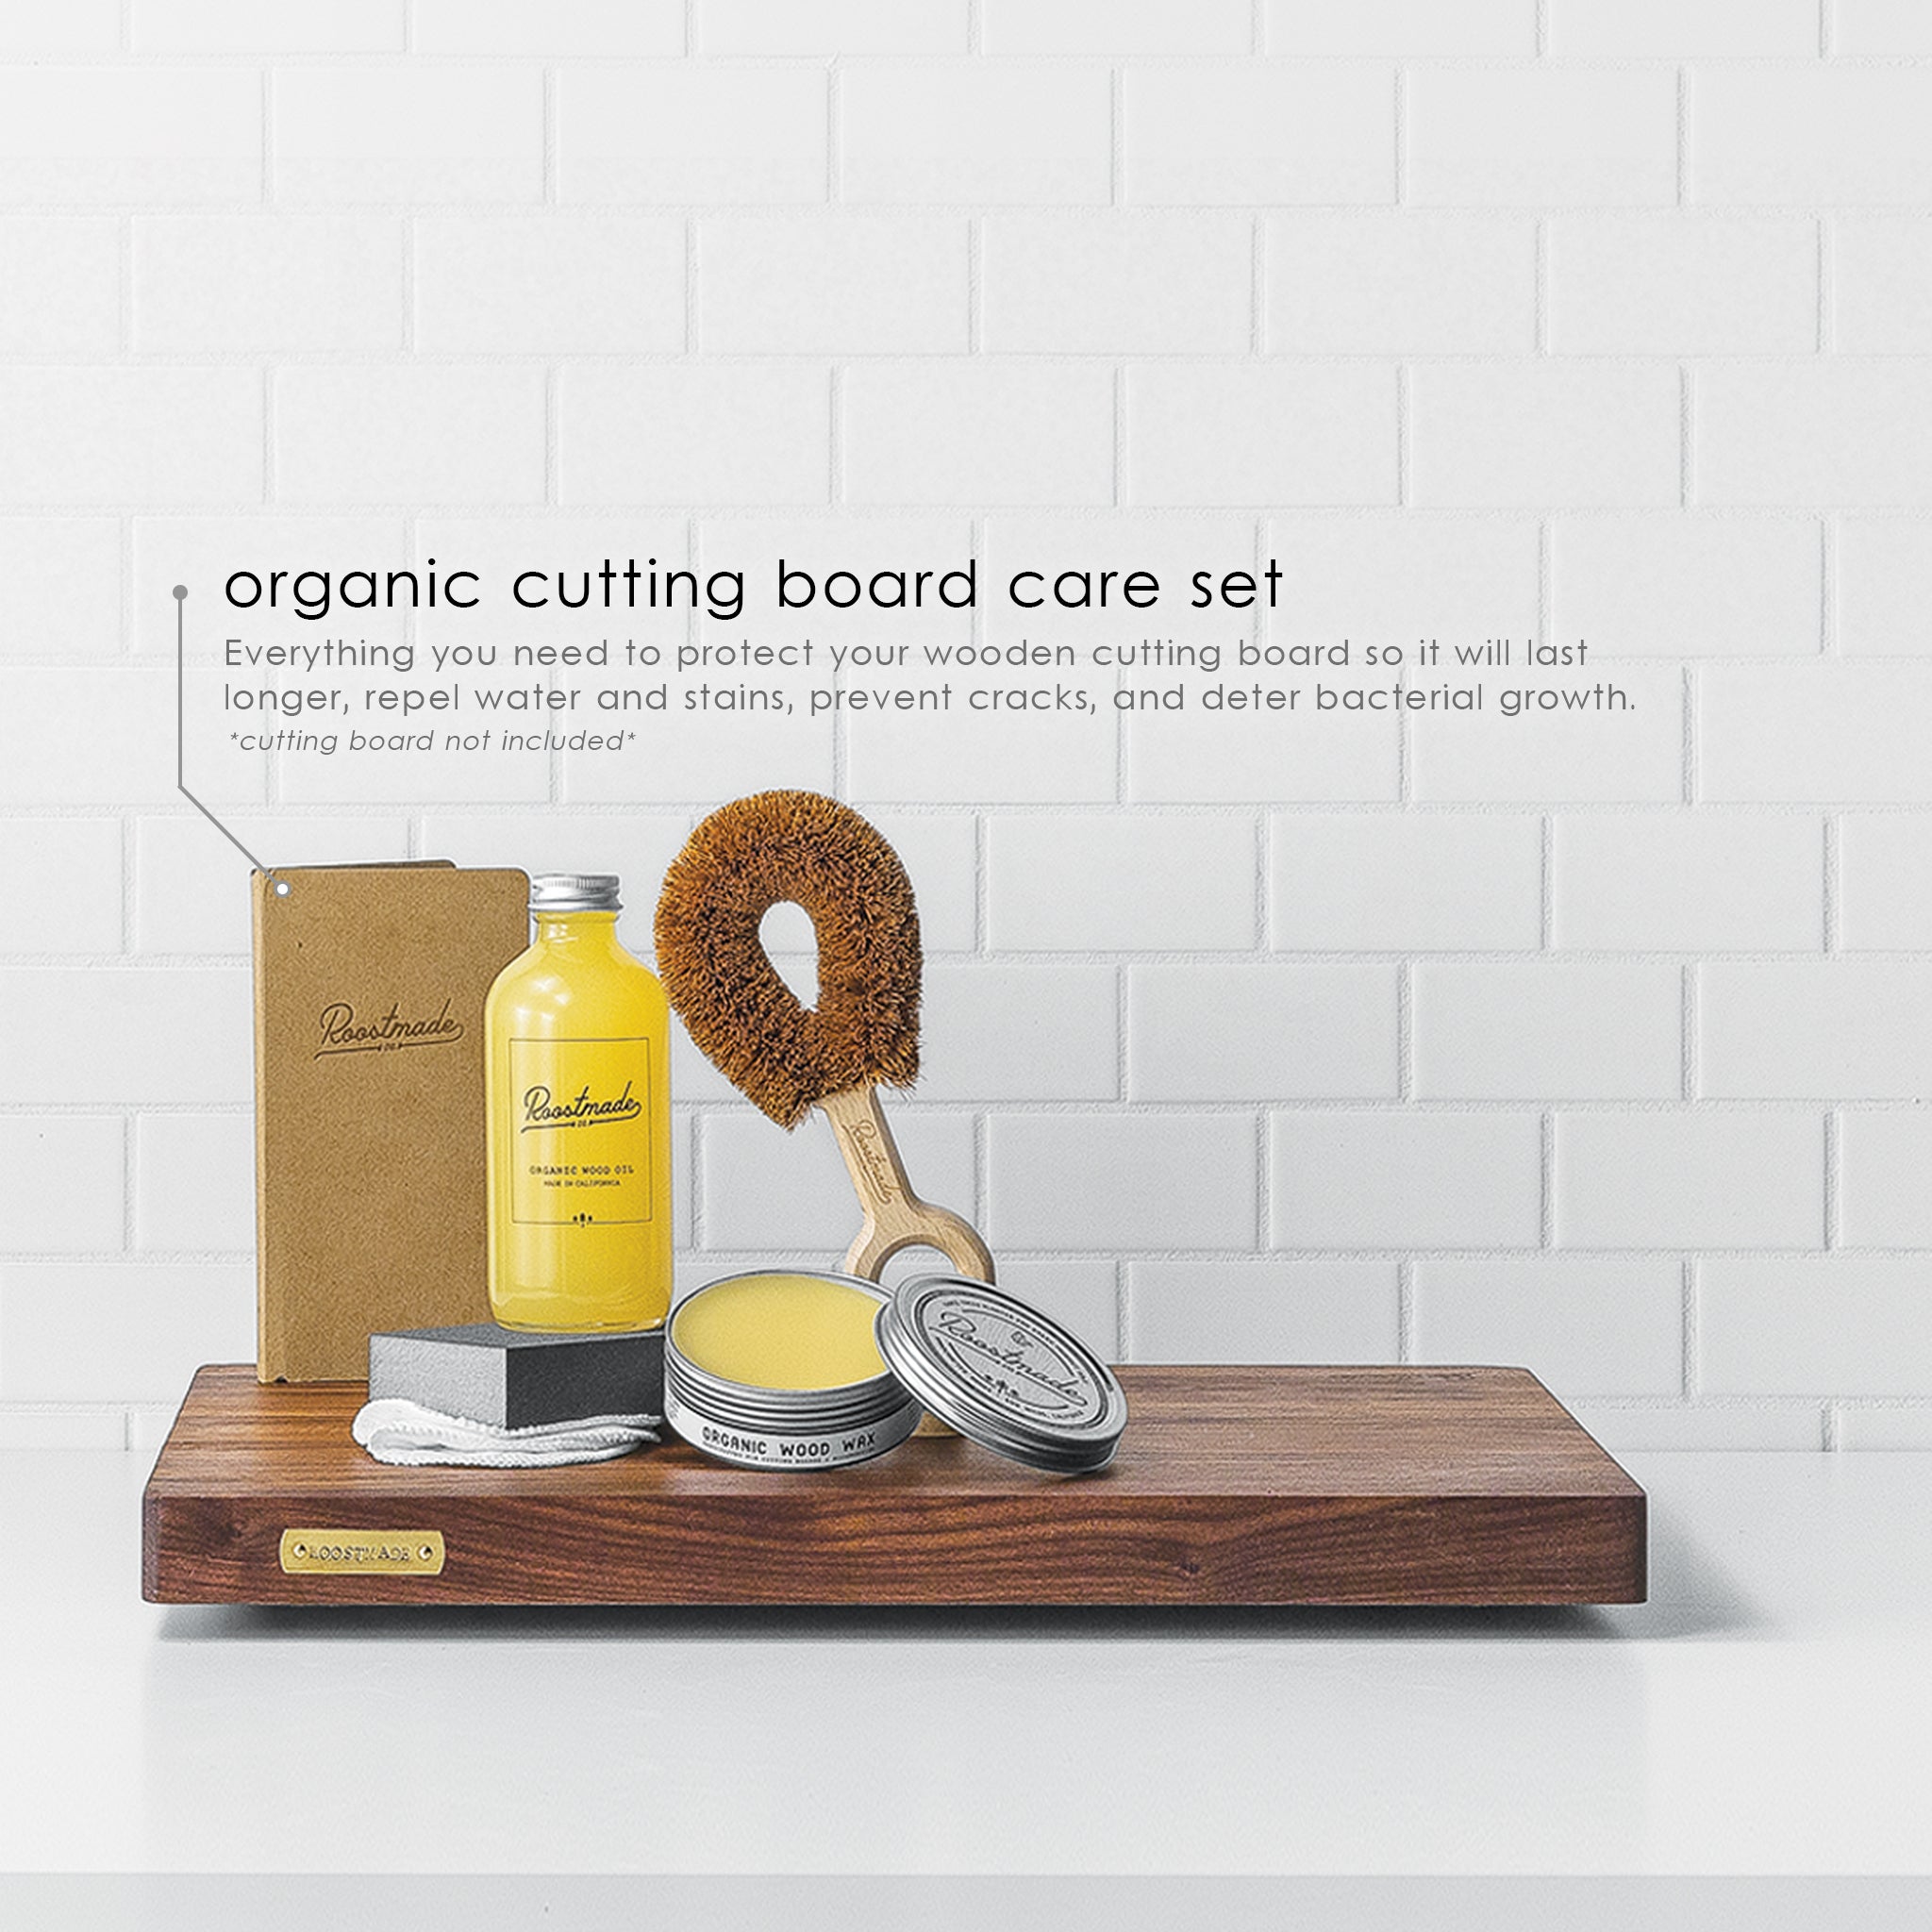 Organic Cutting Board Care Set